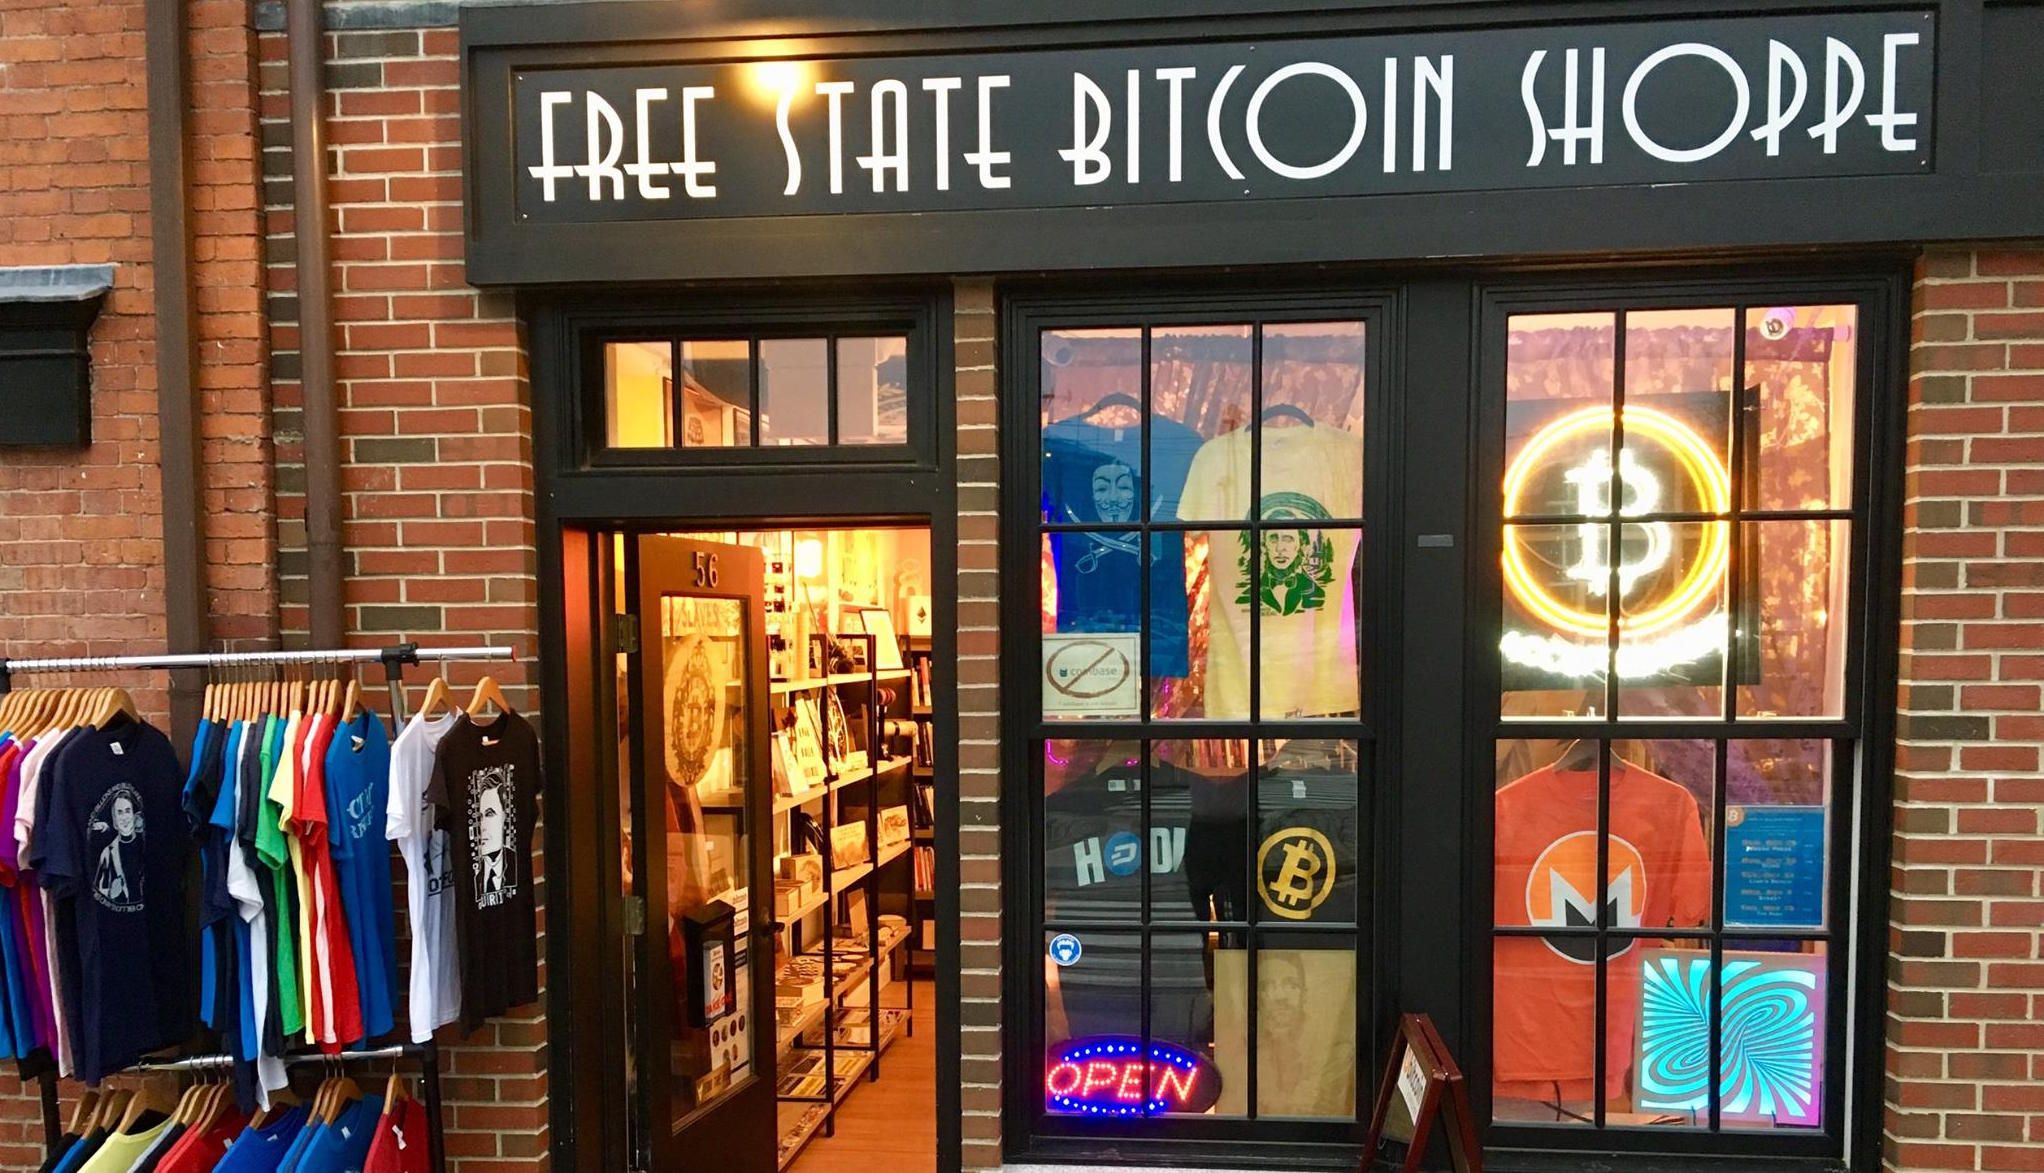 Free-State-Bitcoin-Shoppe.jpg